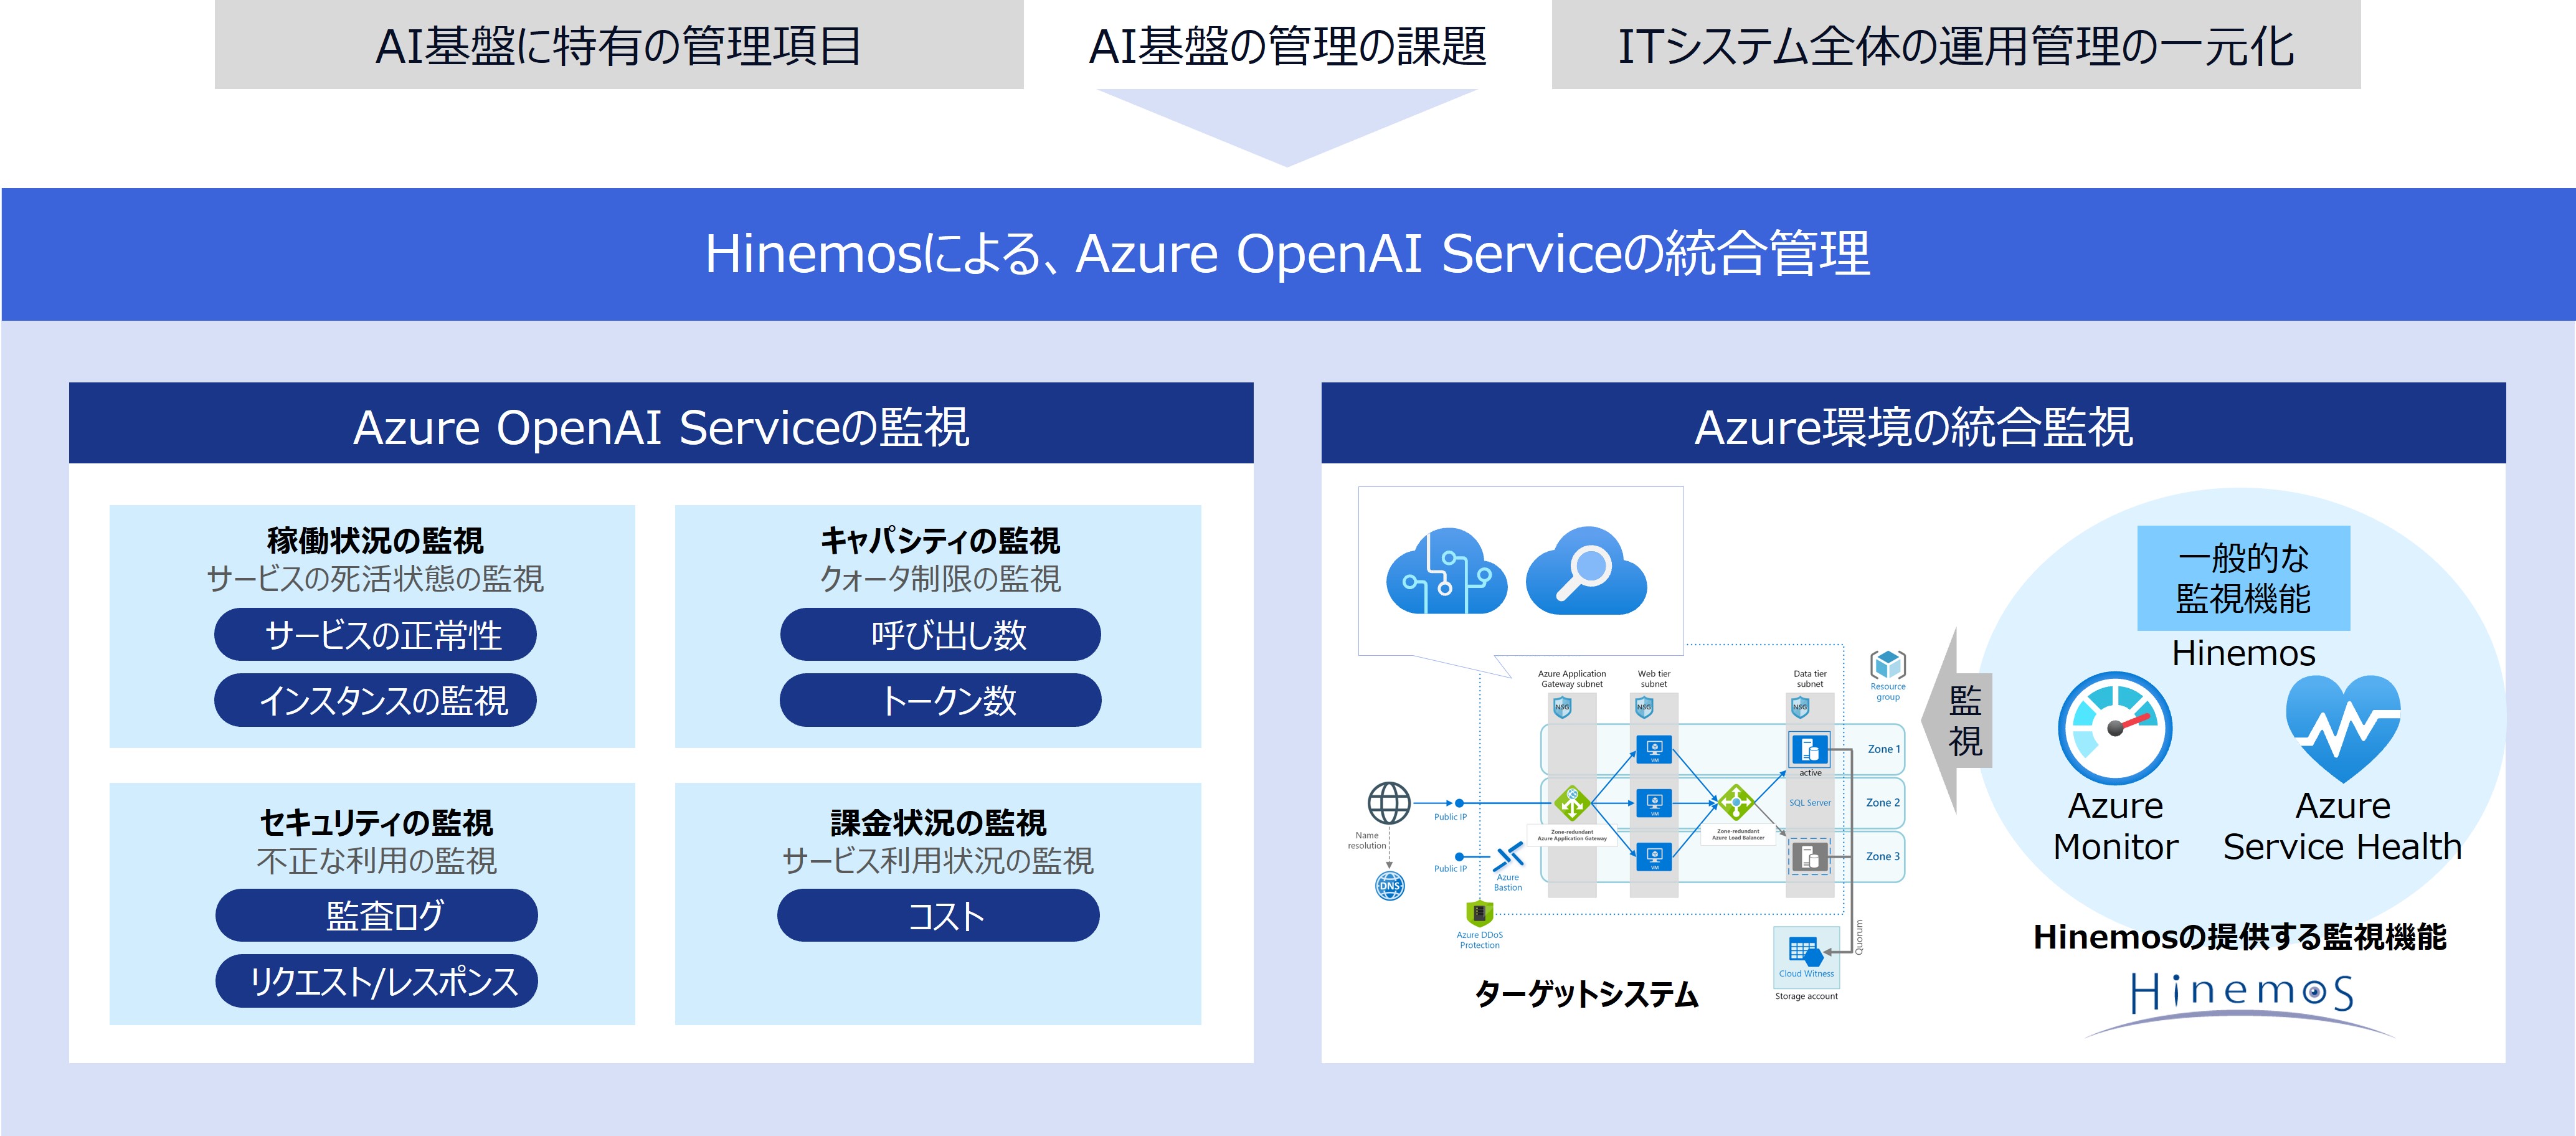 Azure OpenAI Service基盤の運用管理